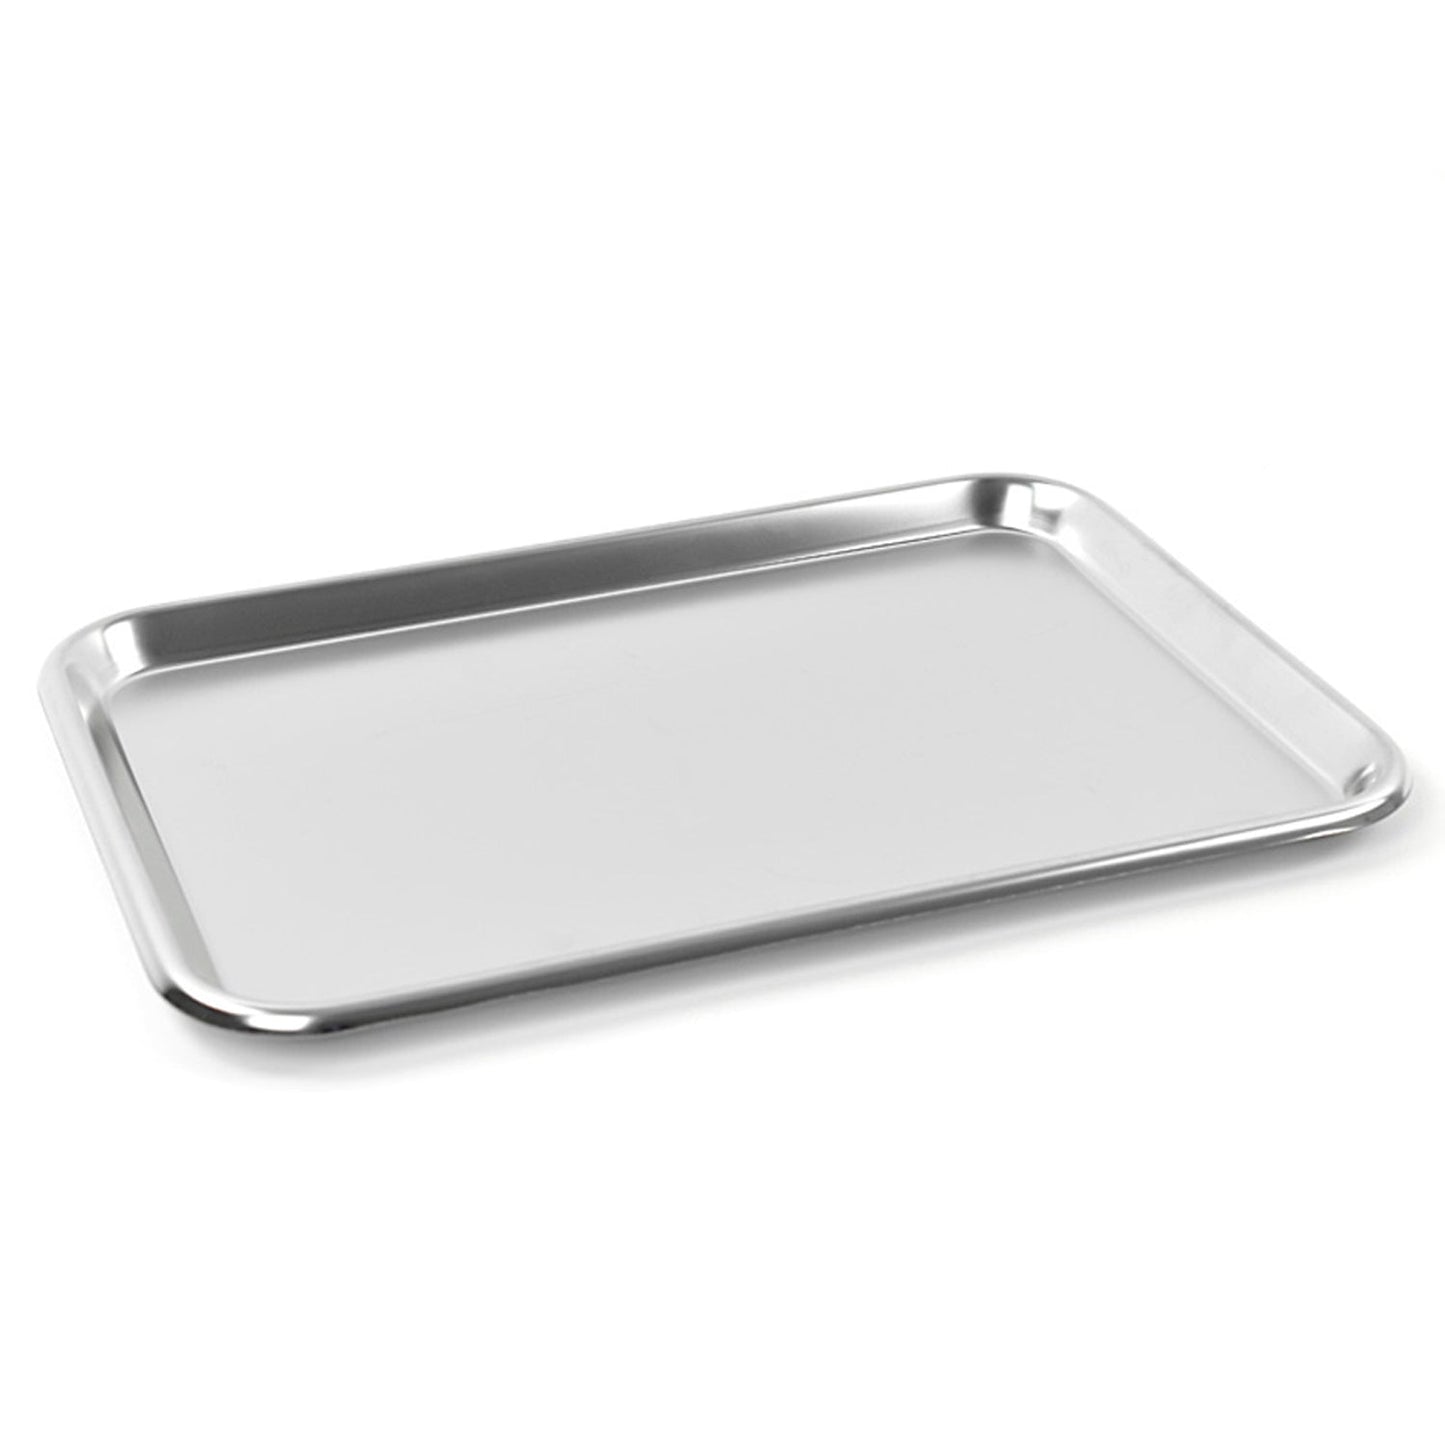 Stainless Steel Tray - 39cm x 27.5cm x 1.9cm